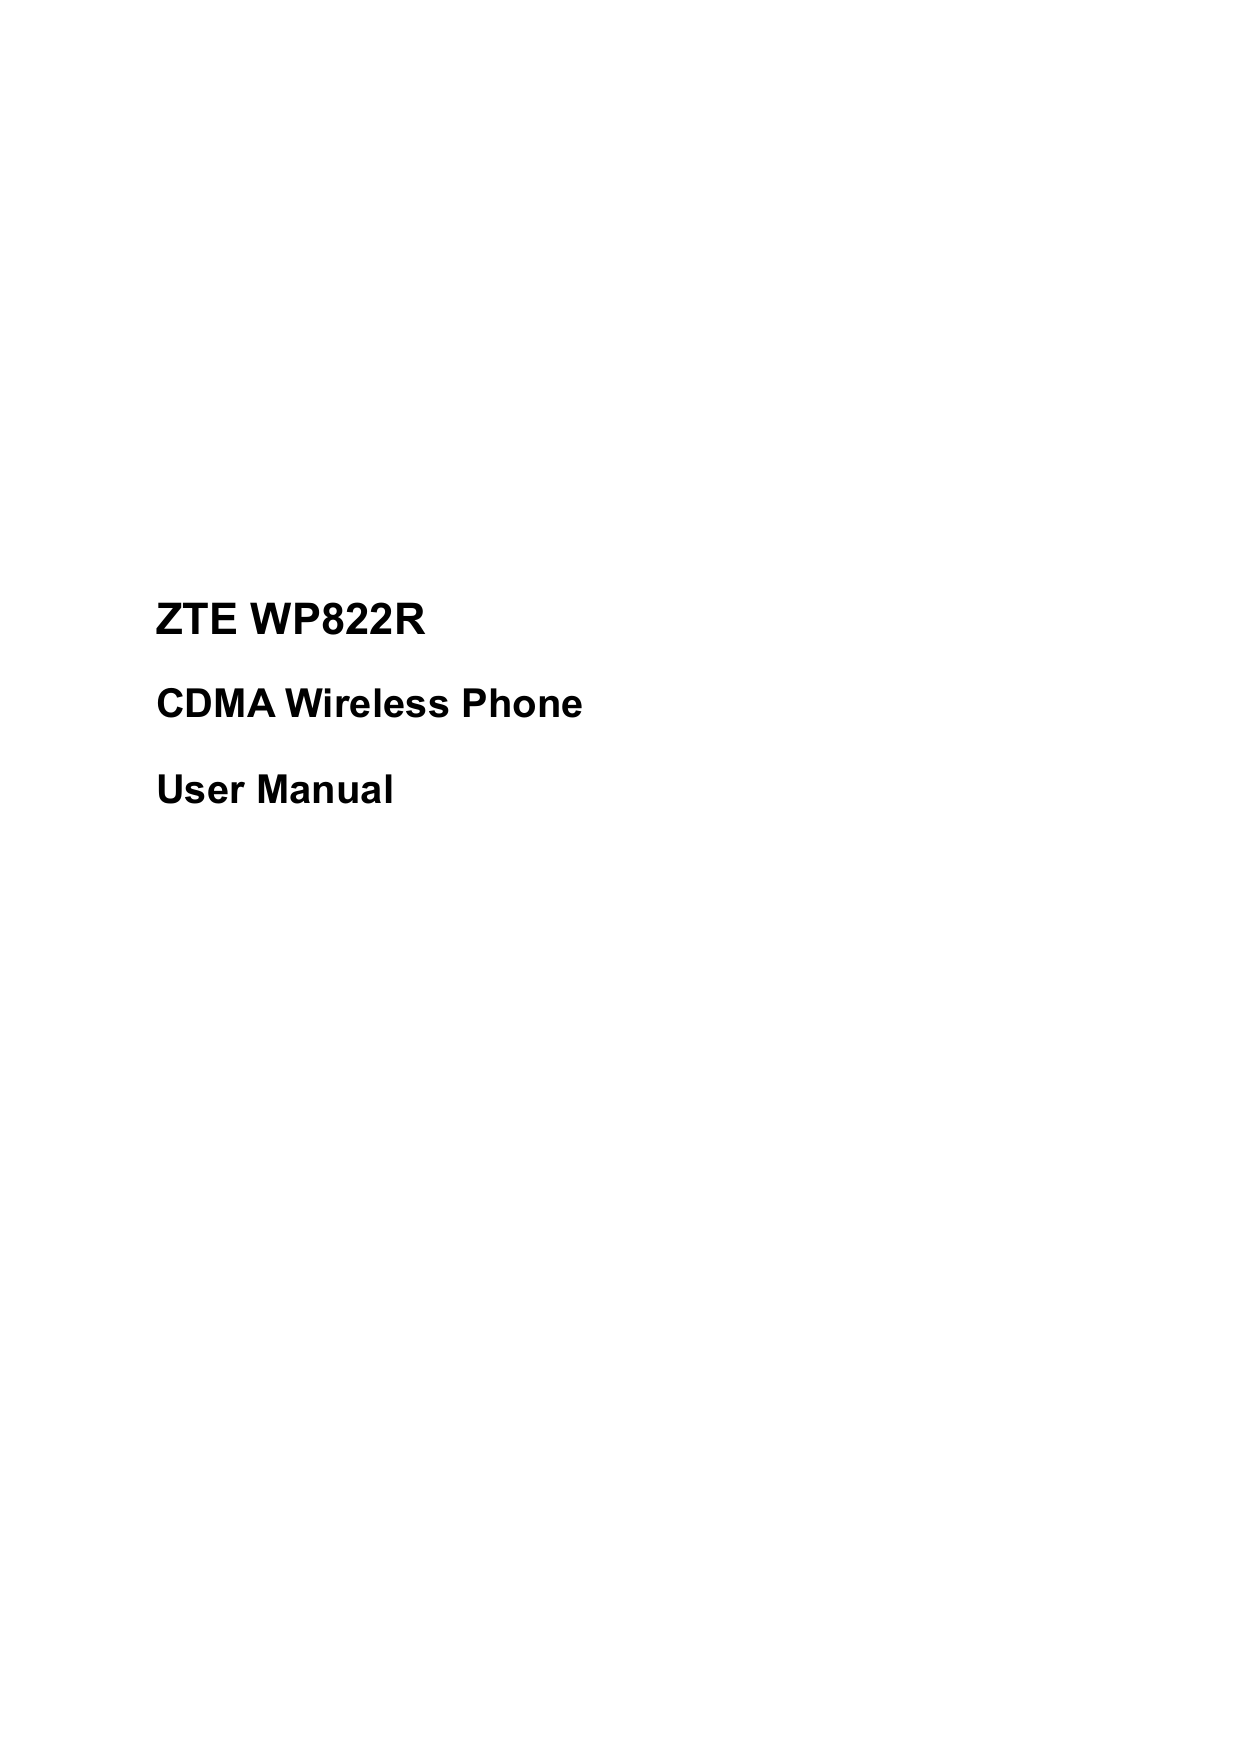      ZTE WP822R CDMA Wireless Phone User Manual  